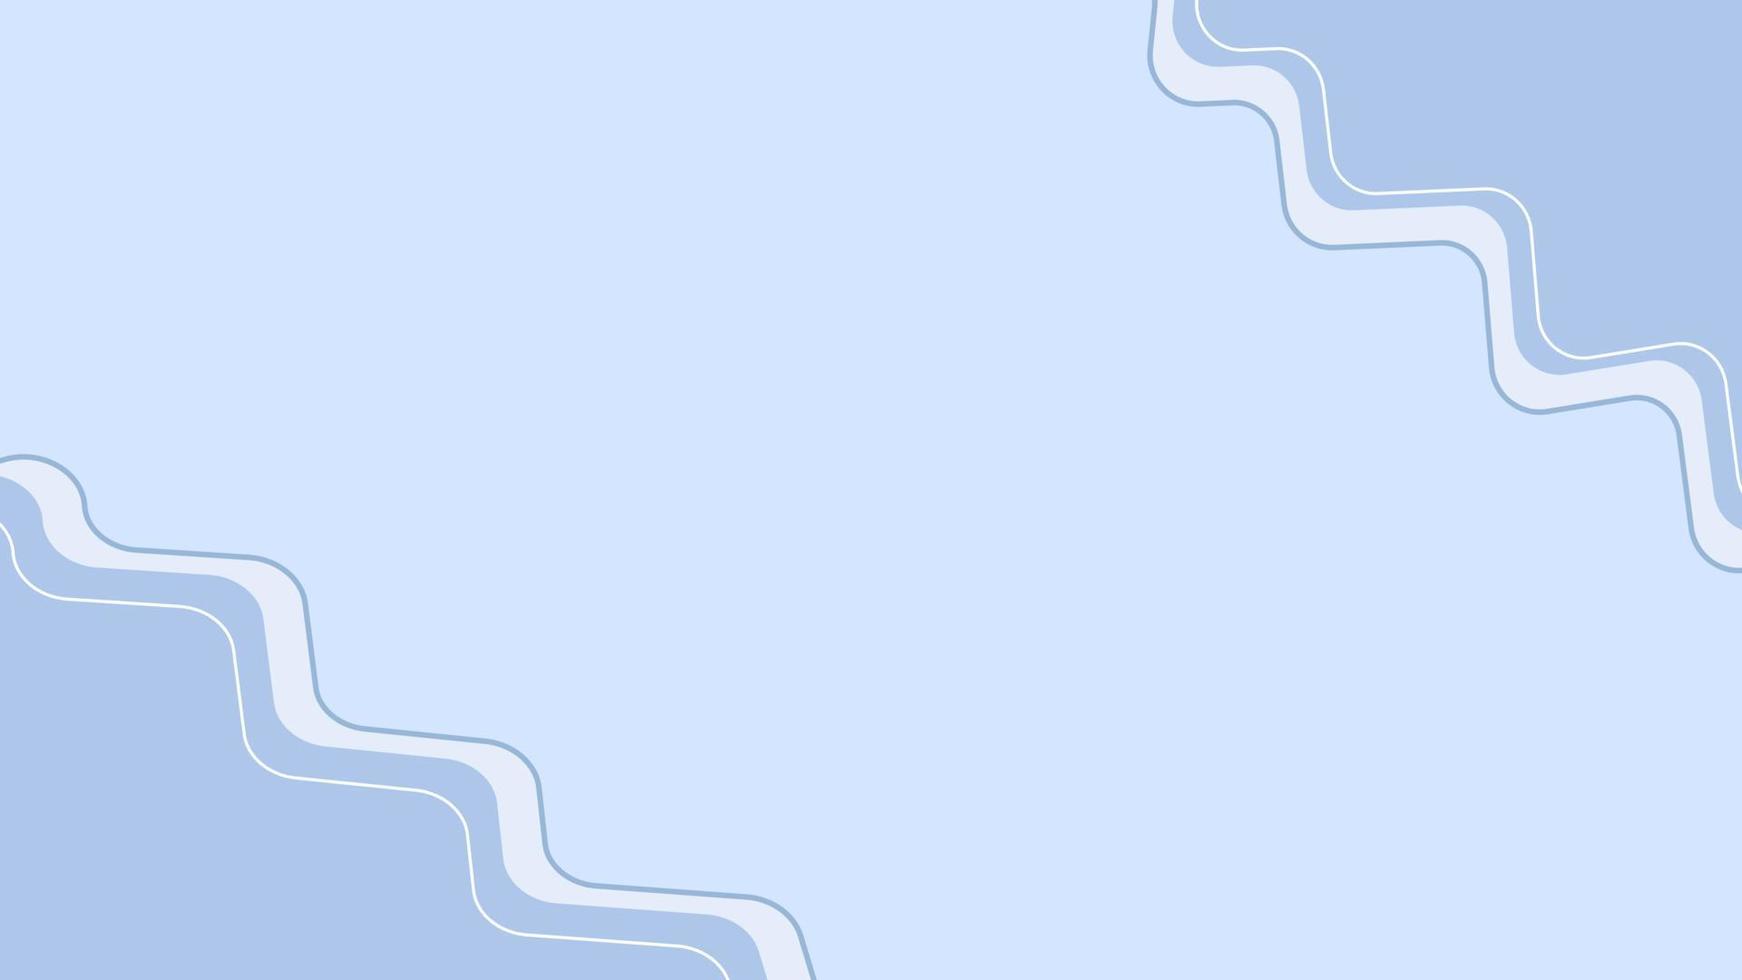 Ilustración de fondo de pantalla mínimo abstracto azul pastel lindo estético, perfecto para papel tapiz, telón de fondo, postal, fondo y pancarta vector